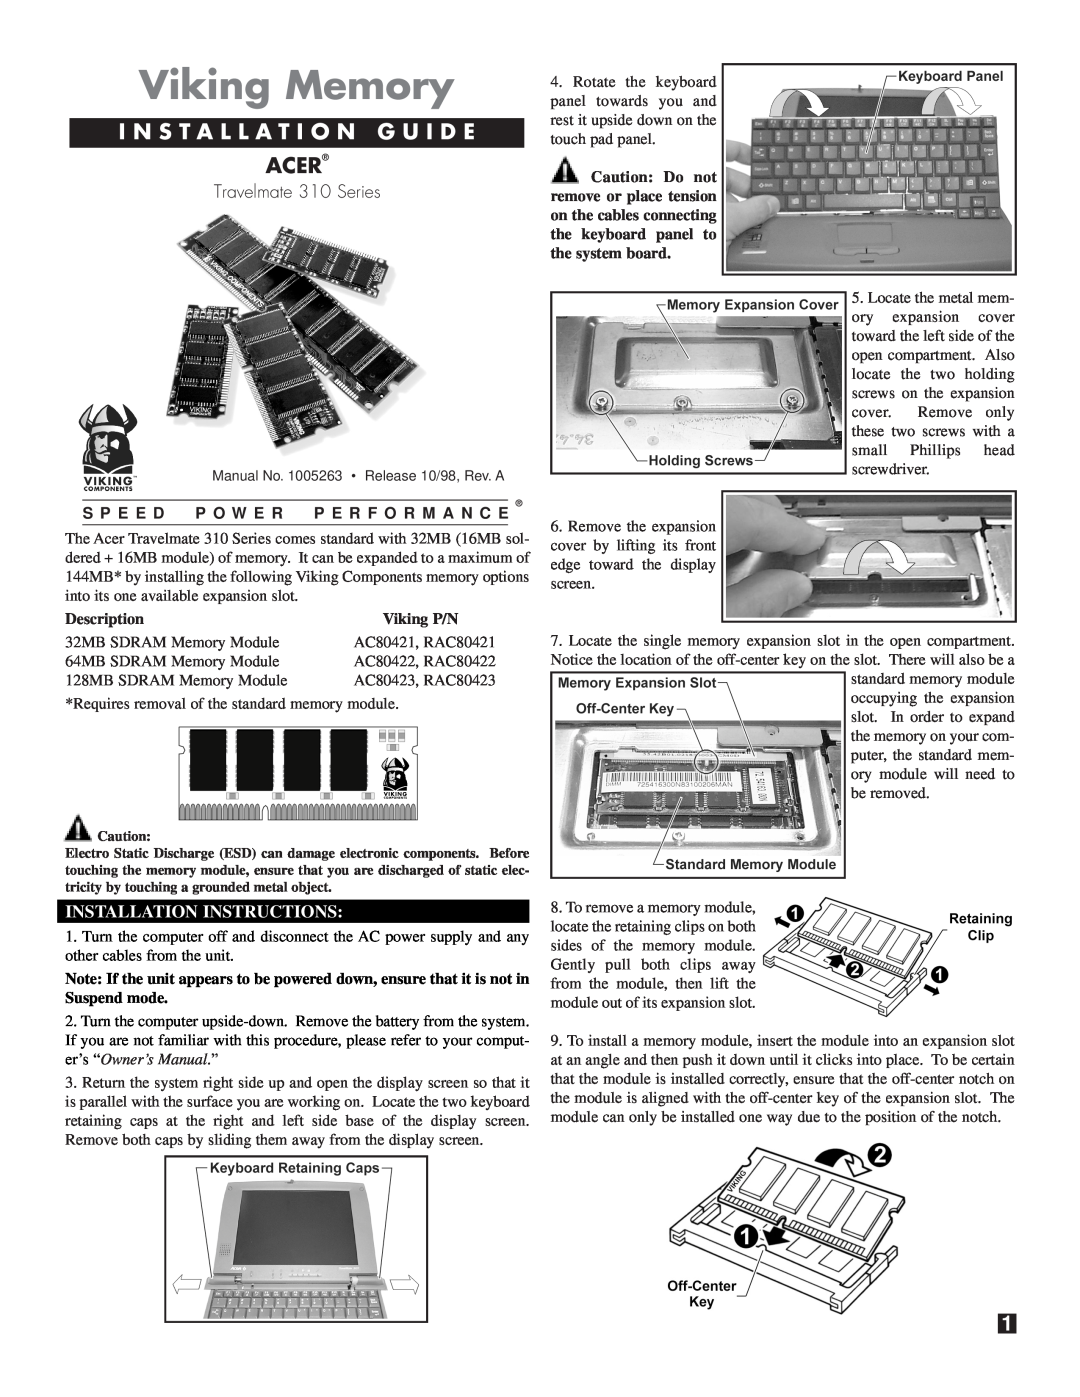 Acer 310 installation instructions Installation Instructions, Viking Memory, I N S T A L L A T I O N G U I D E, Acer 